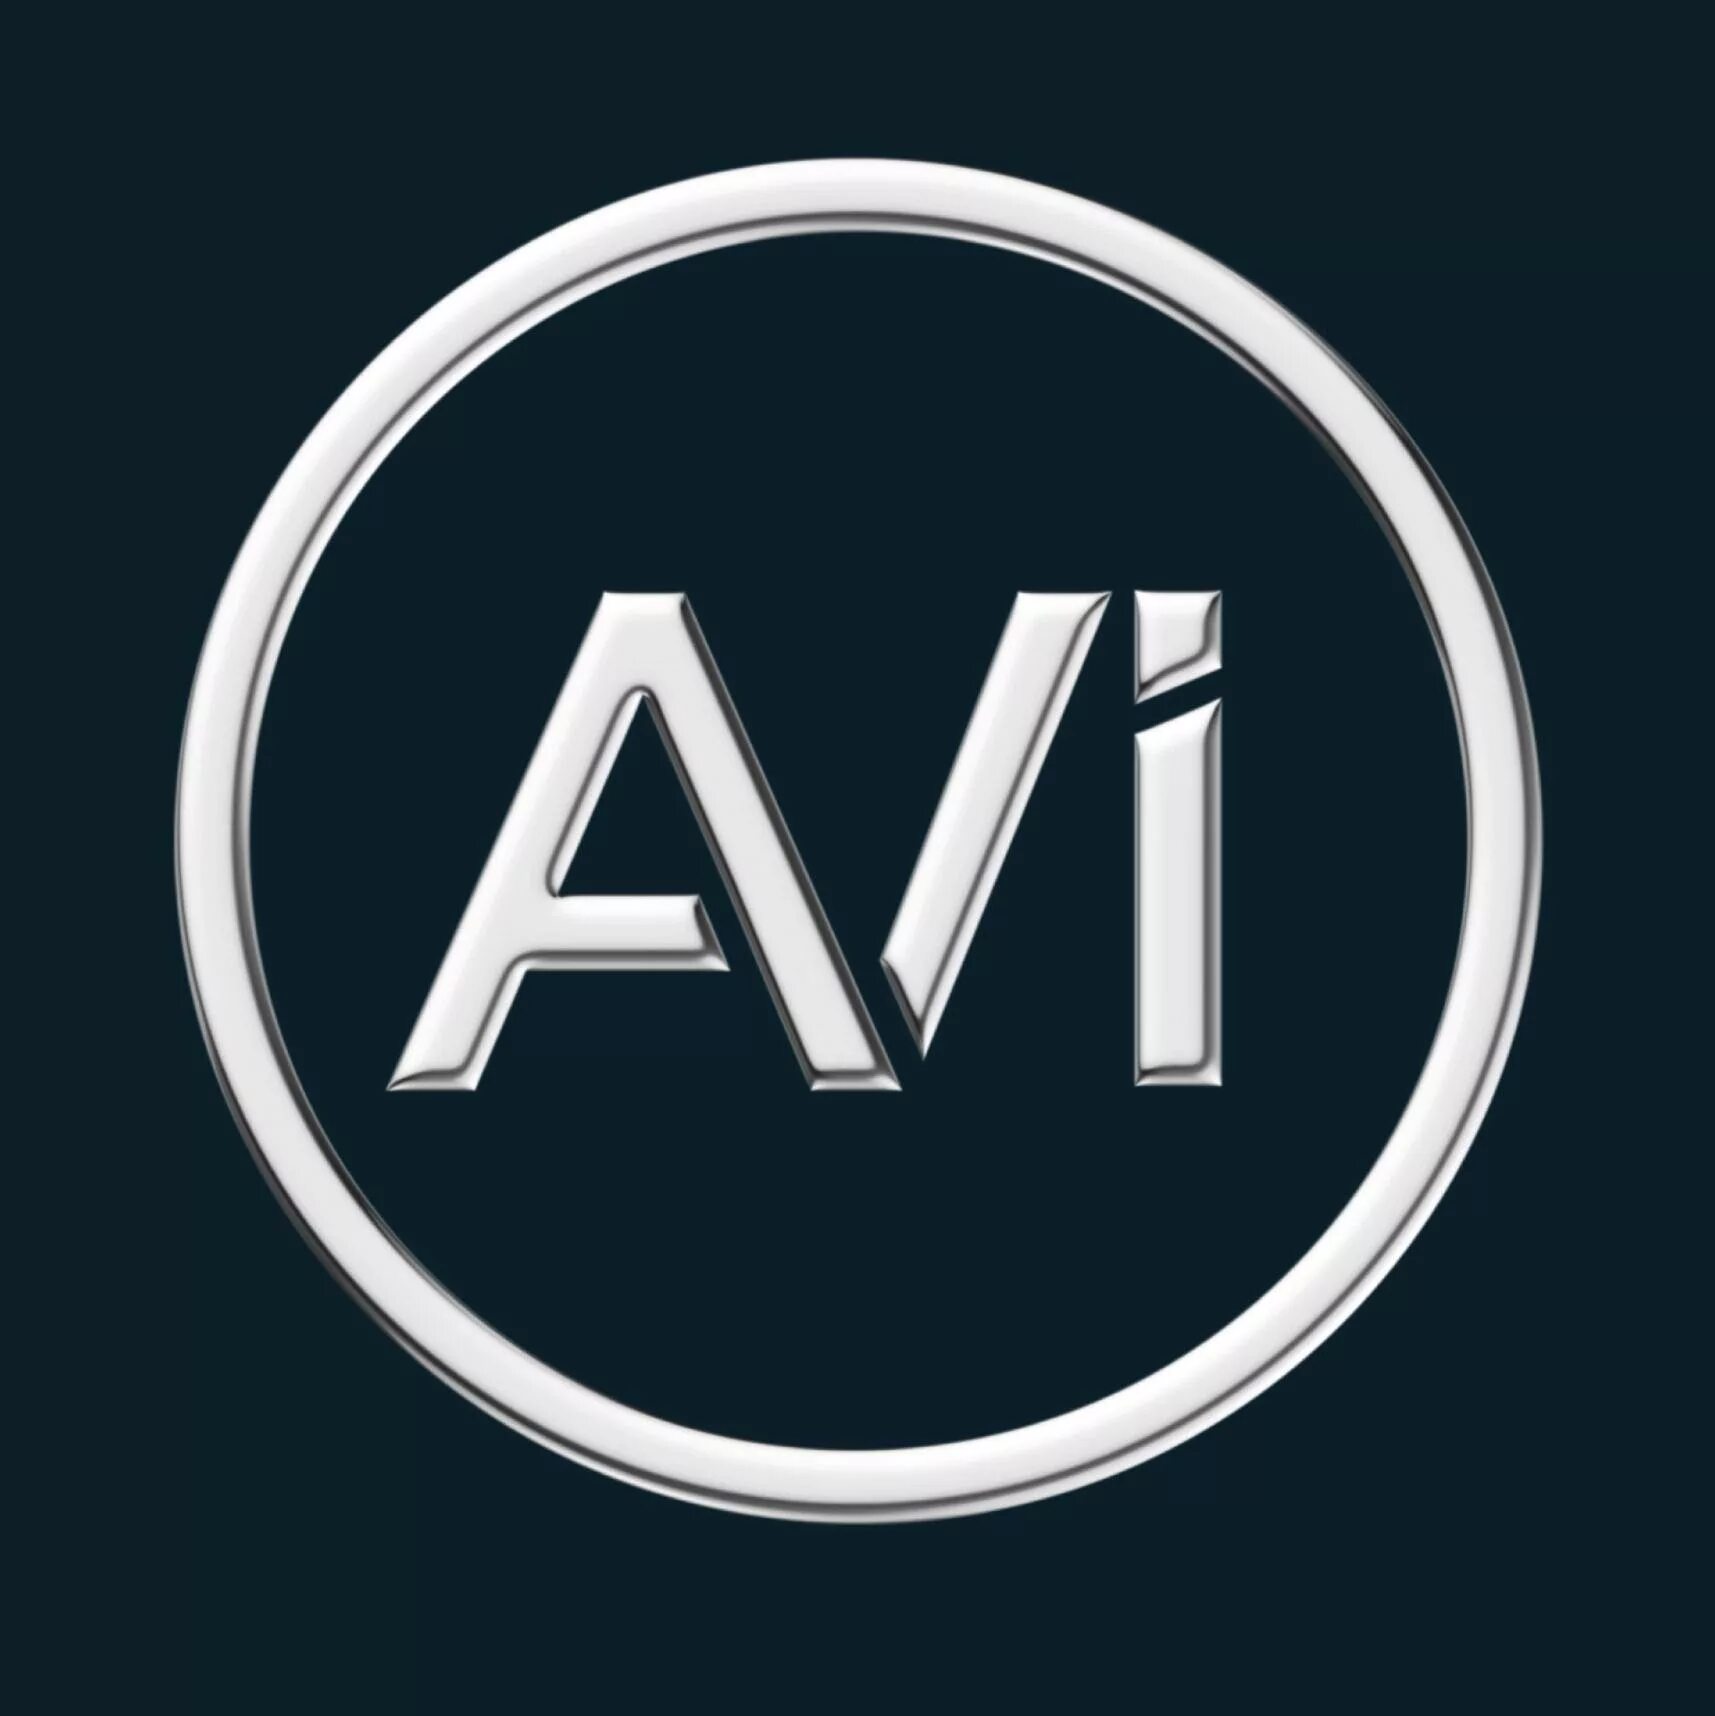 Av y. Av логотип. Ava логотип. Значок avi. Лого на аву.